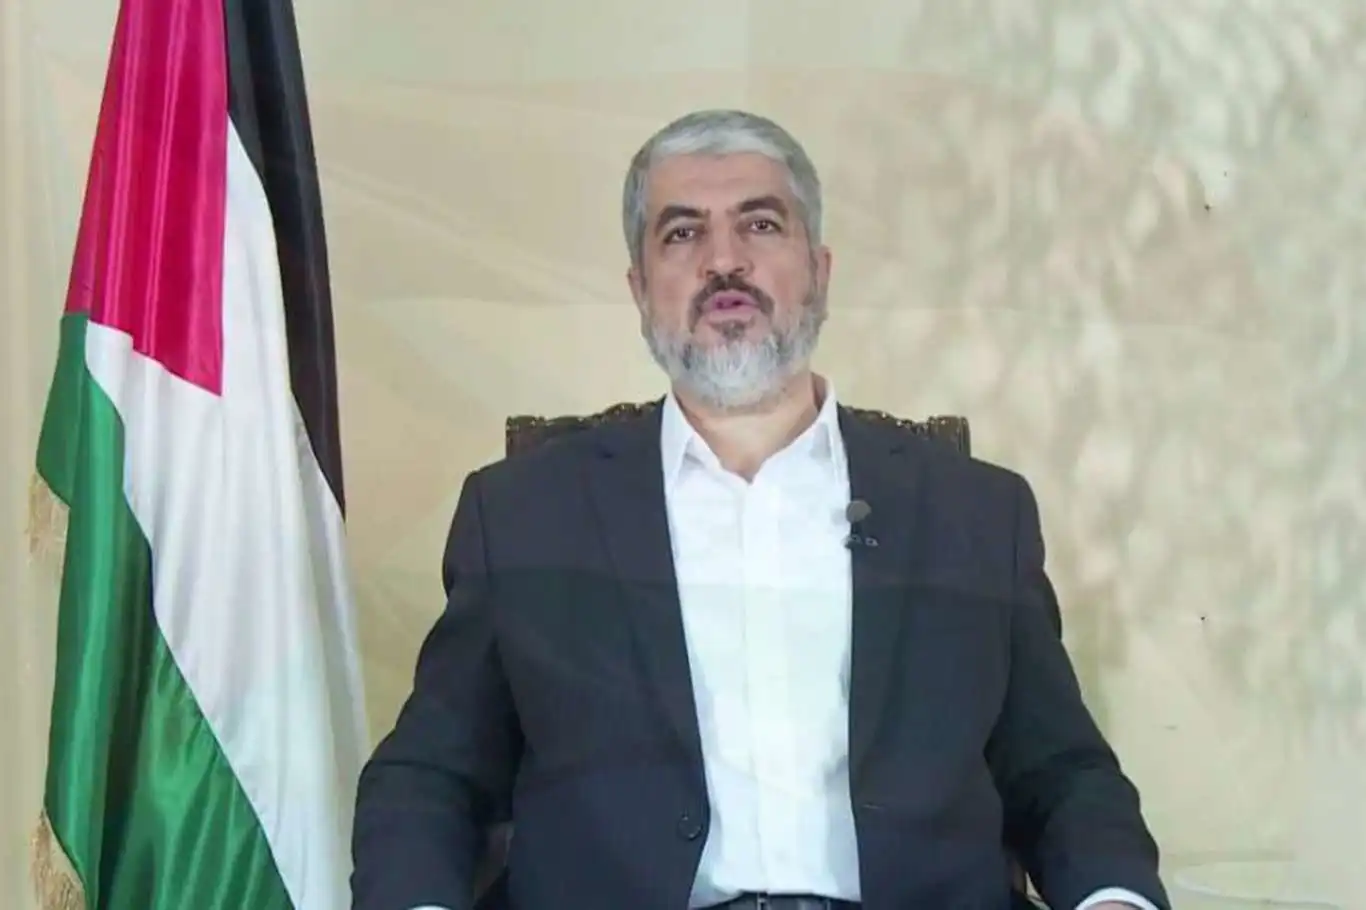 Hamas leader Khaled Mishaal hails Al-Aqsa Flood battle as historic